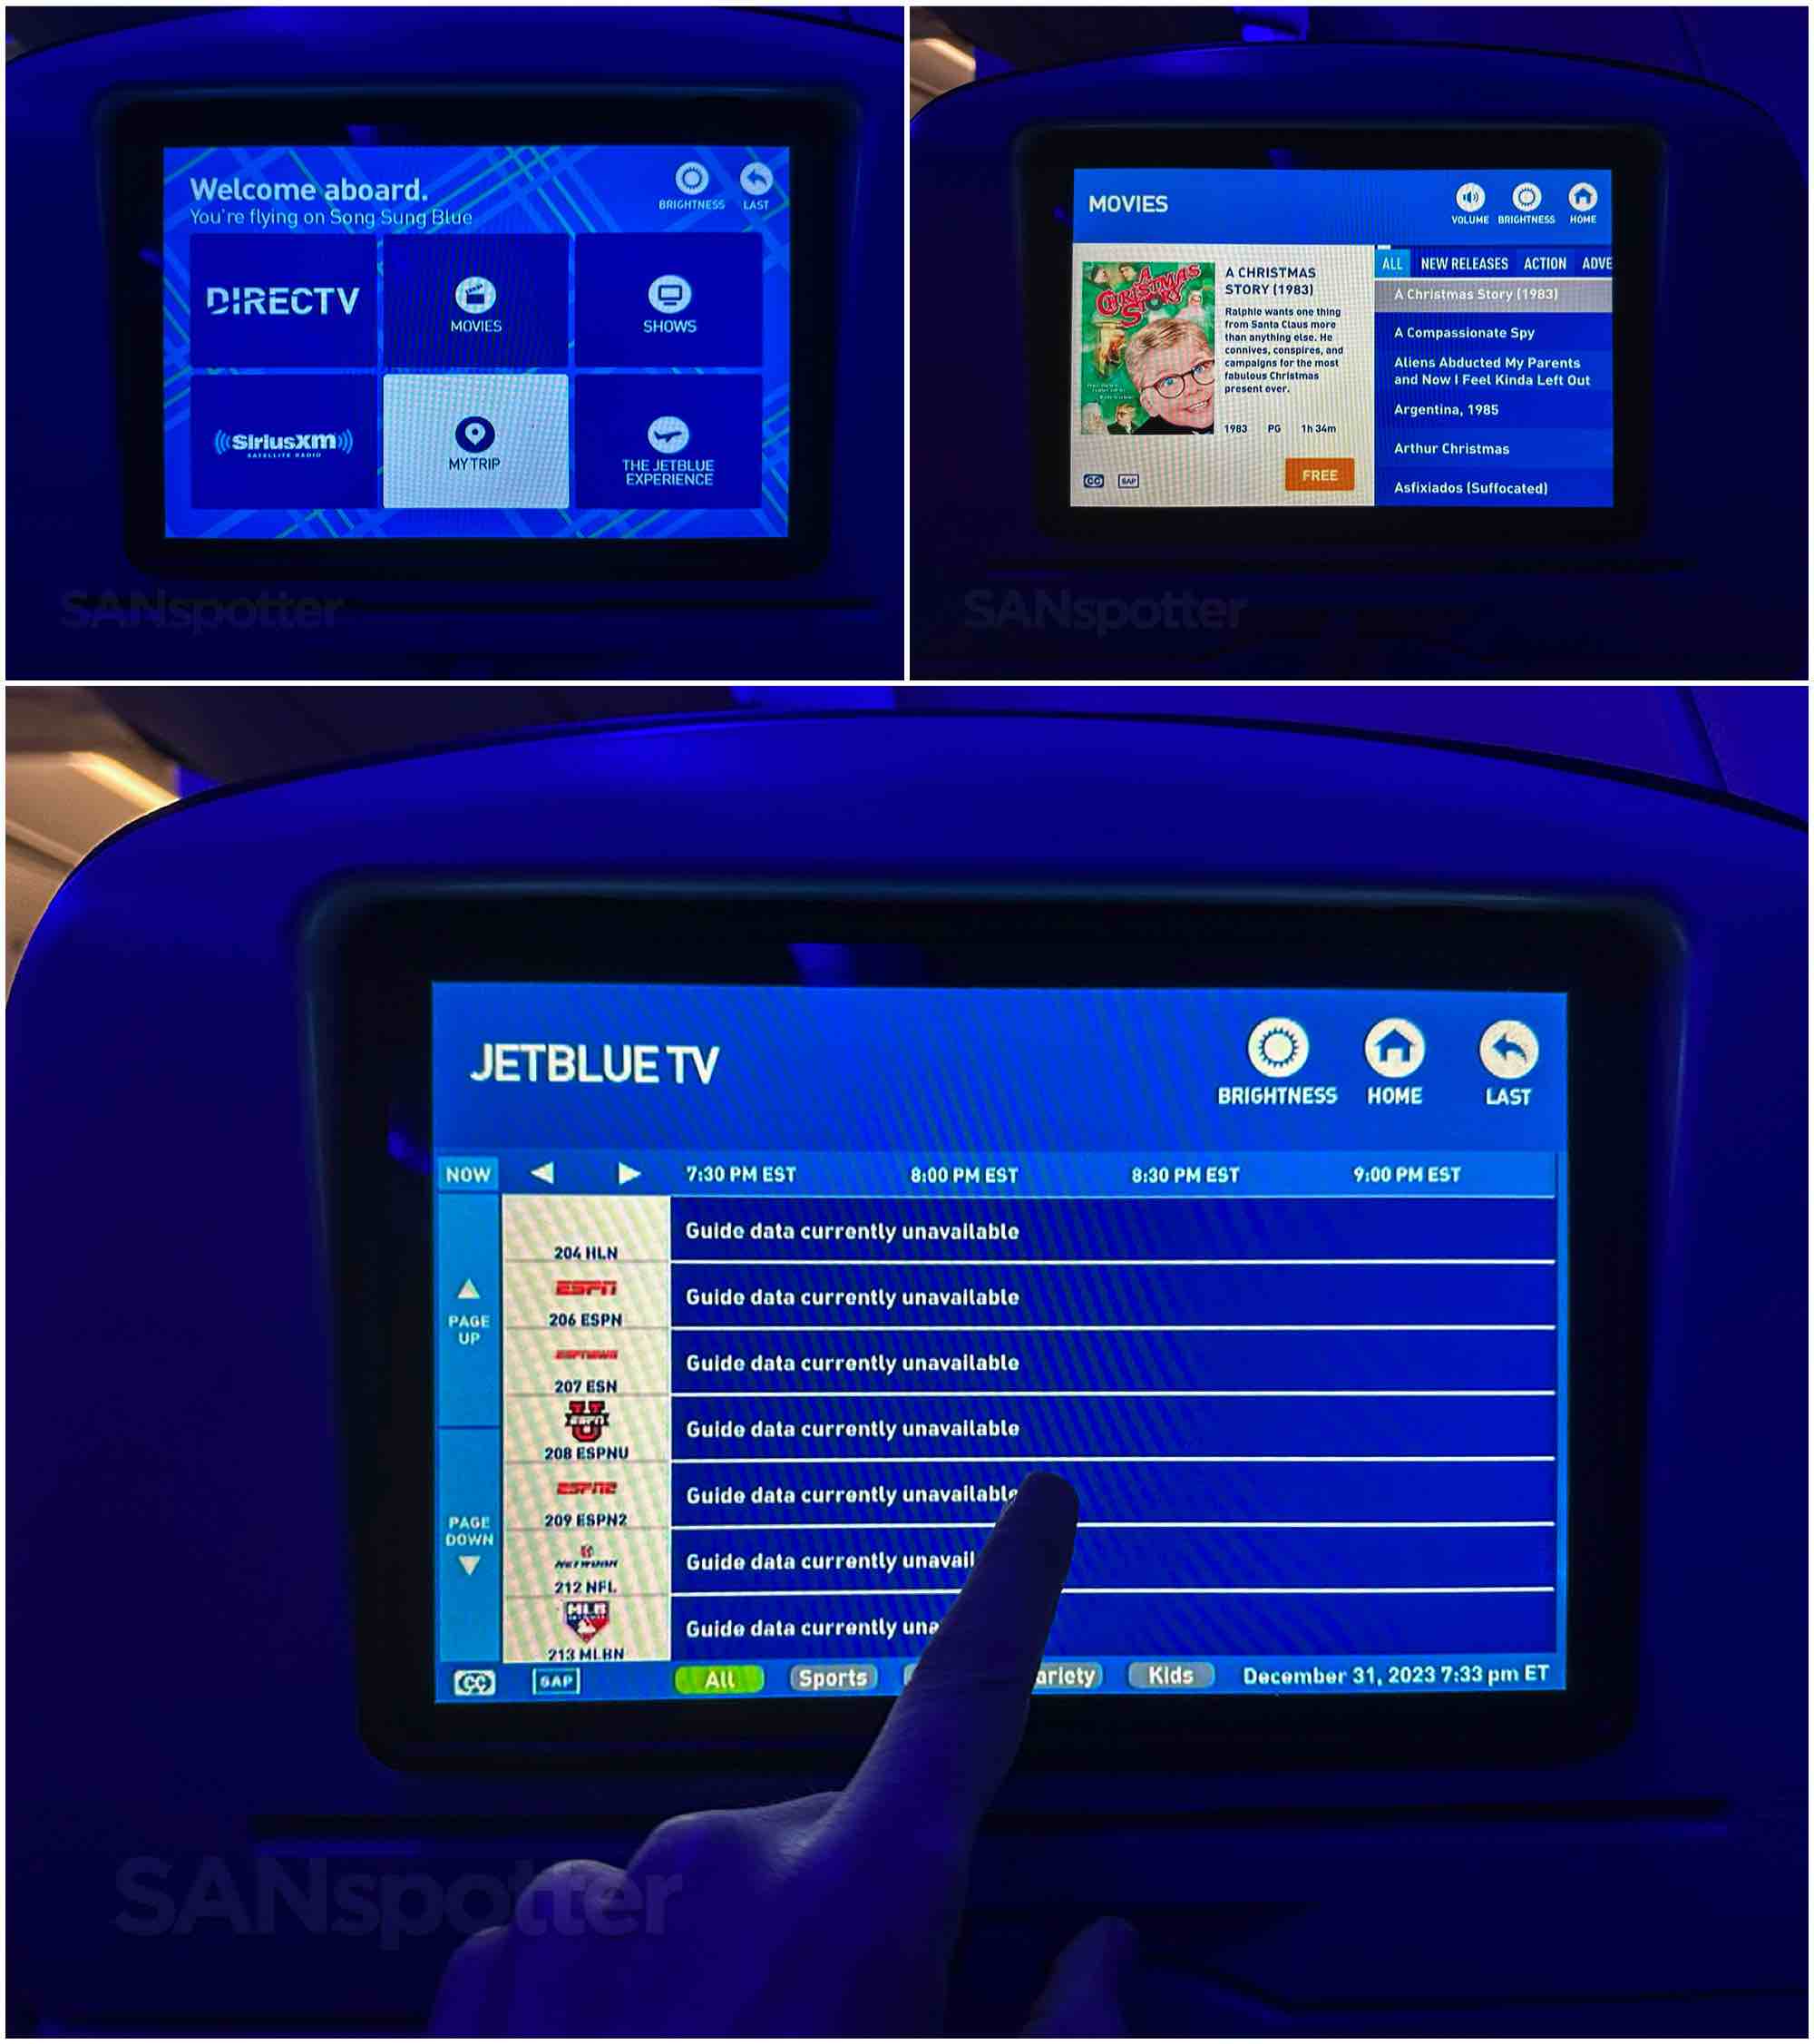 JetBlue A320 Even More Space in-flight entertainment menu